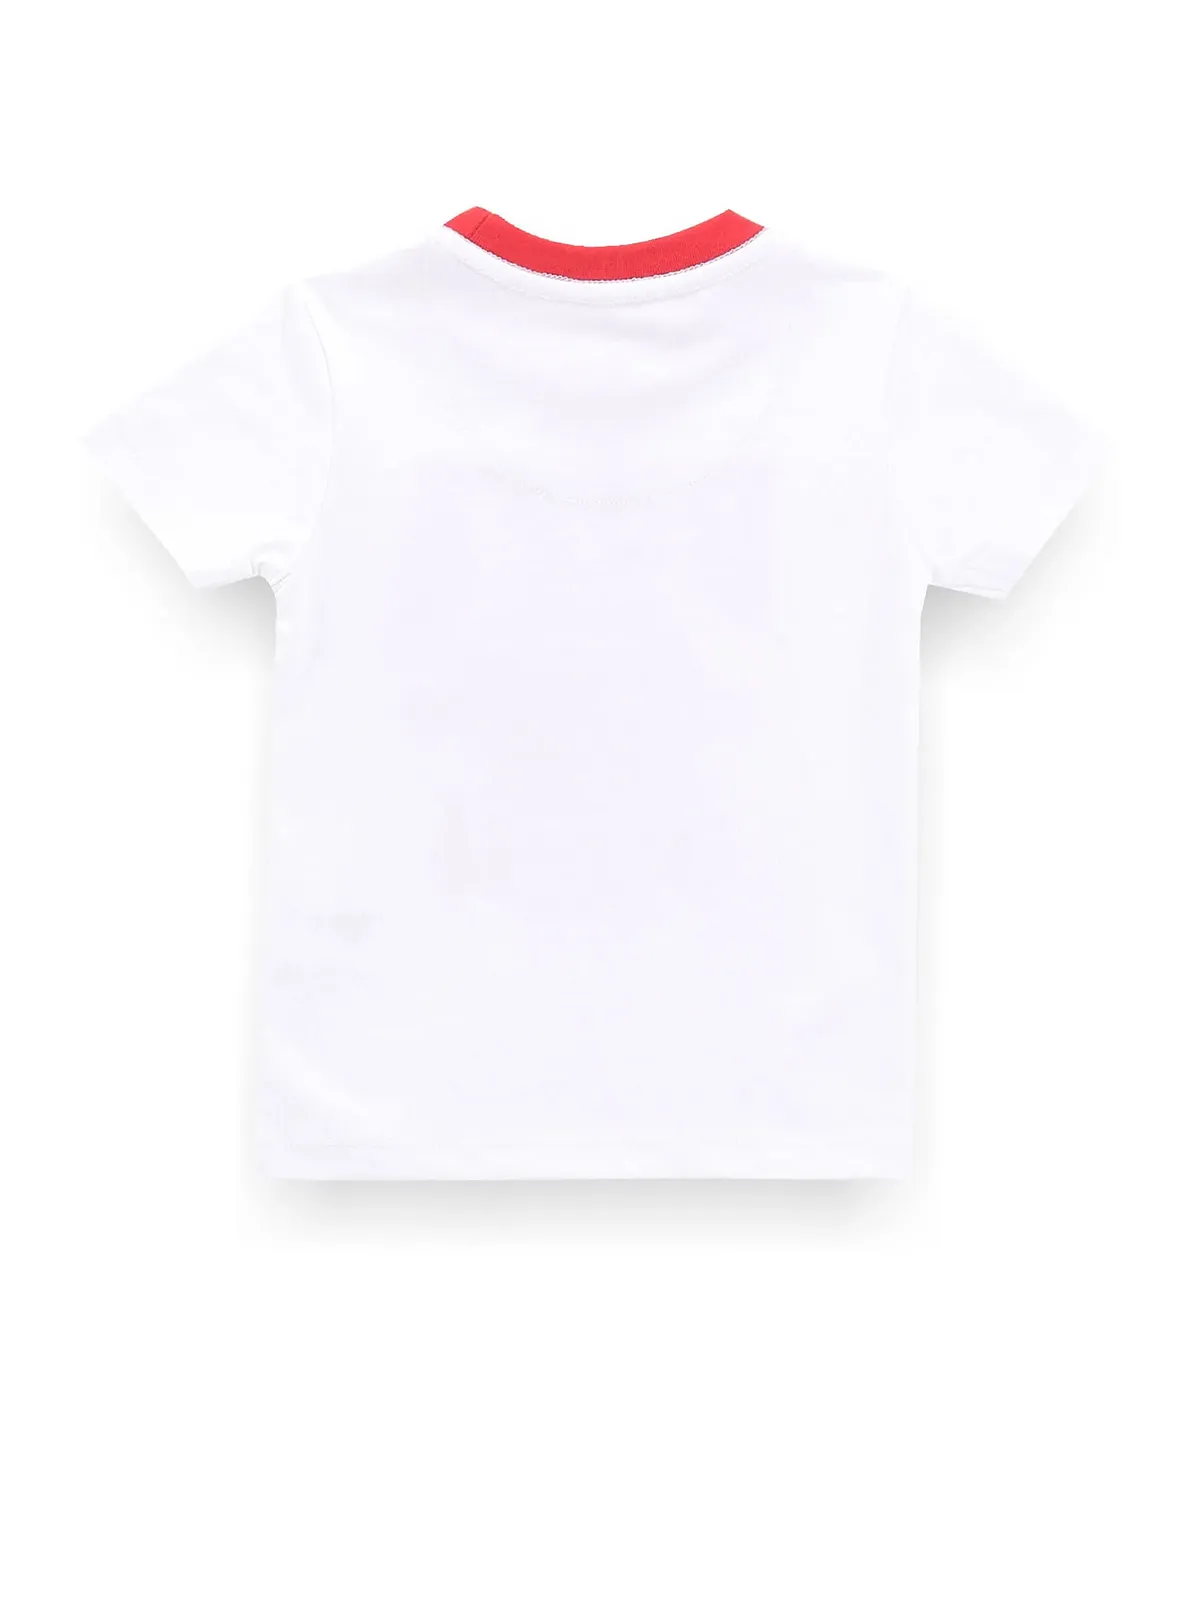 U S POLO ASSN white printed cotton casual t-shirt